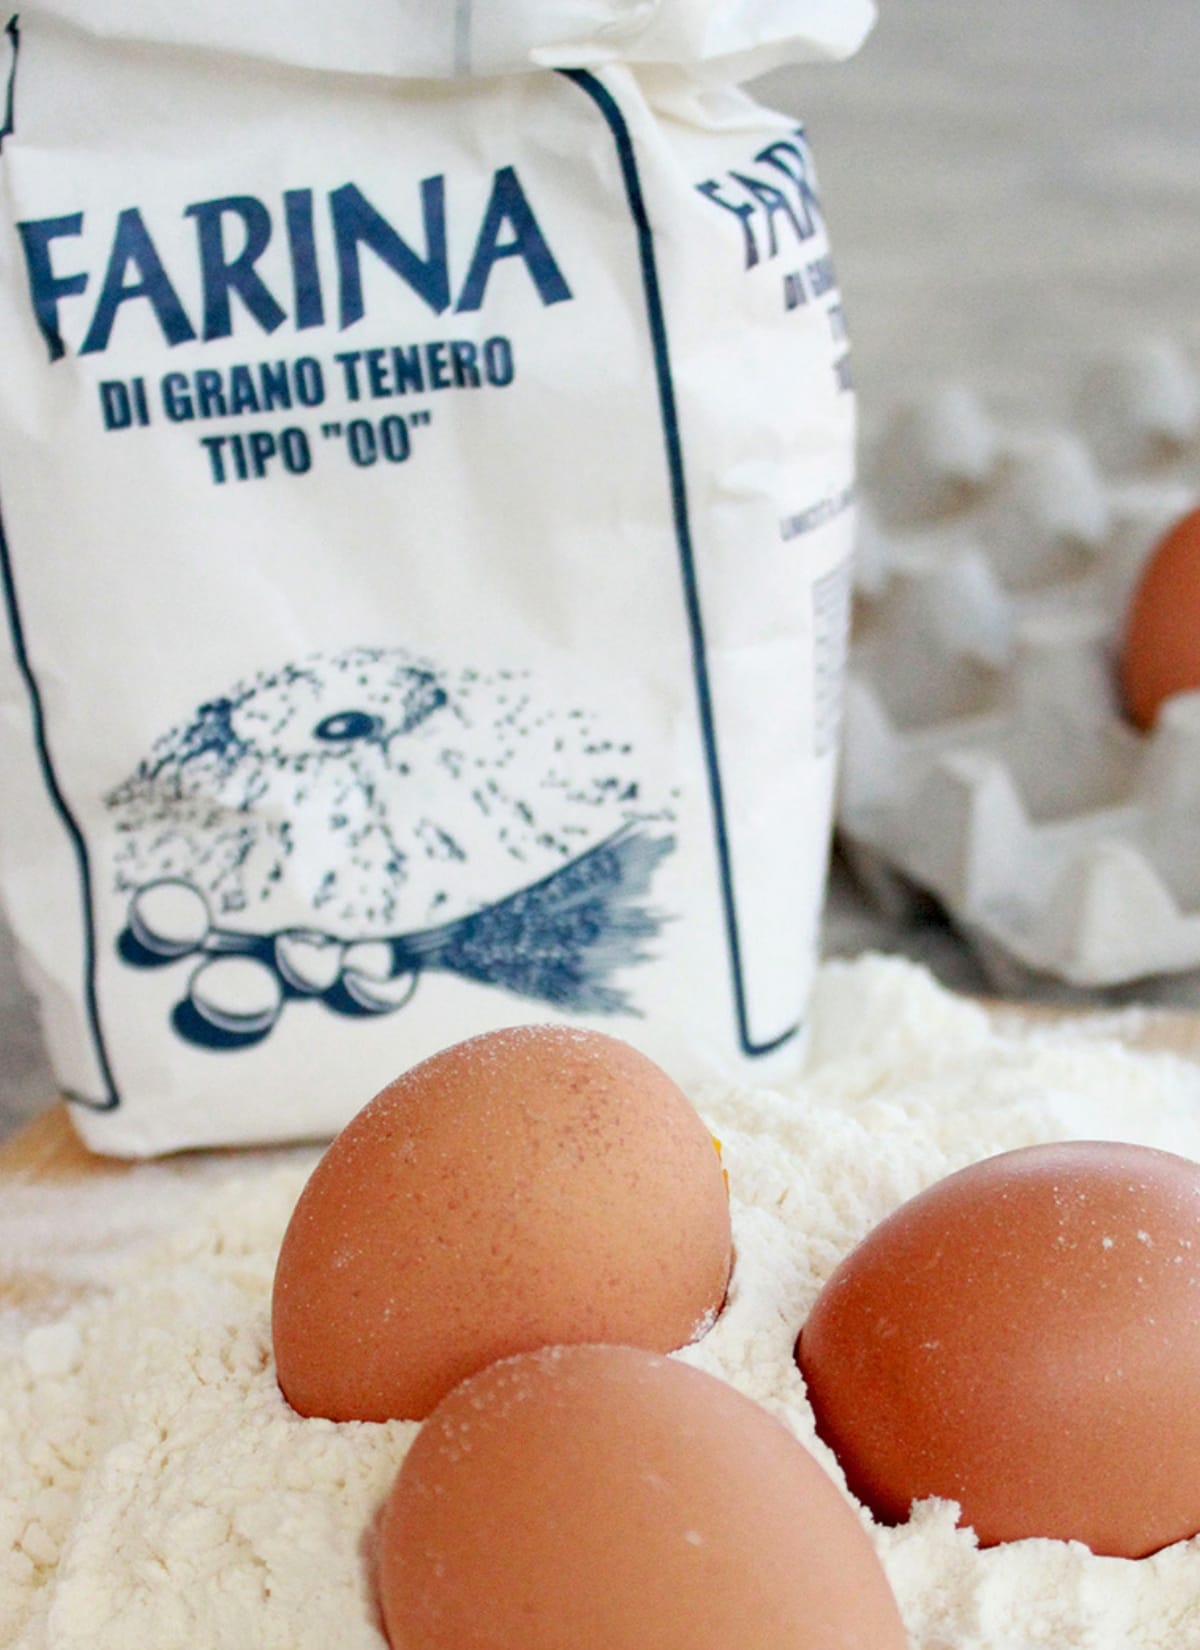 homemade pasta recipe ingredients: eggs and 00 flour.